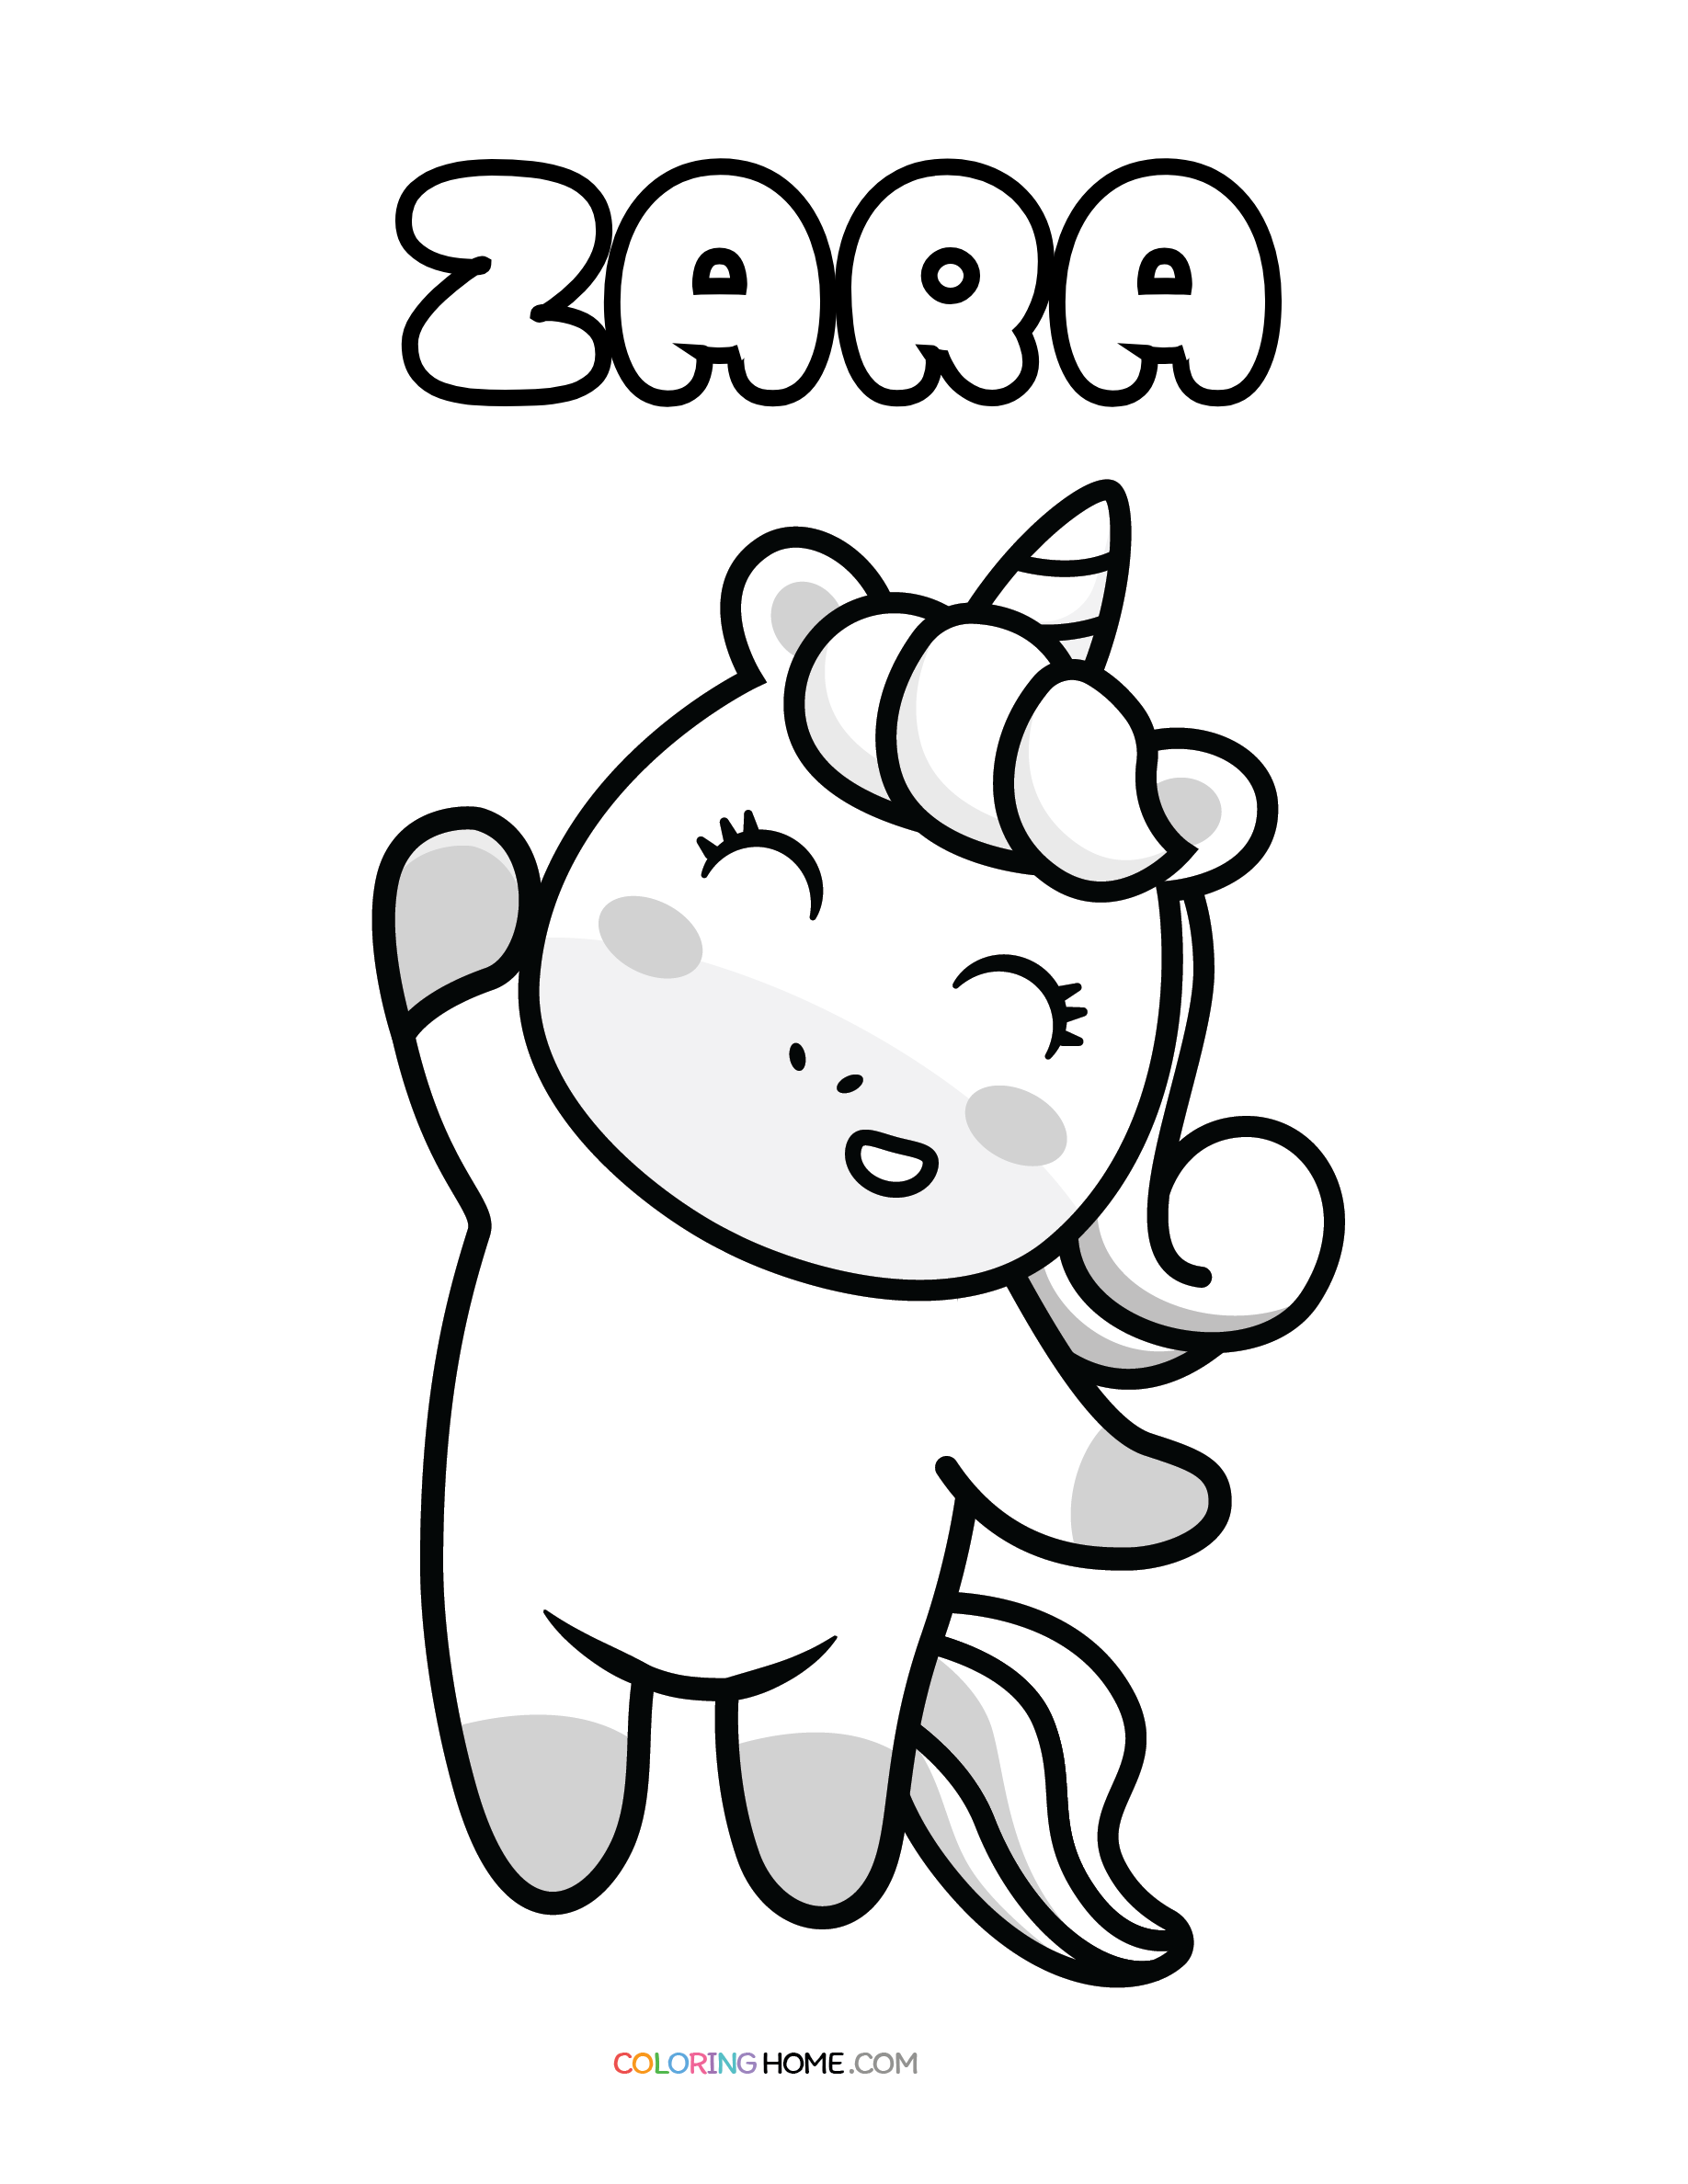 Zara unicorn coloring page